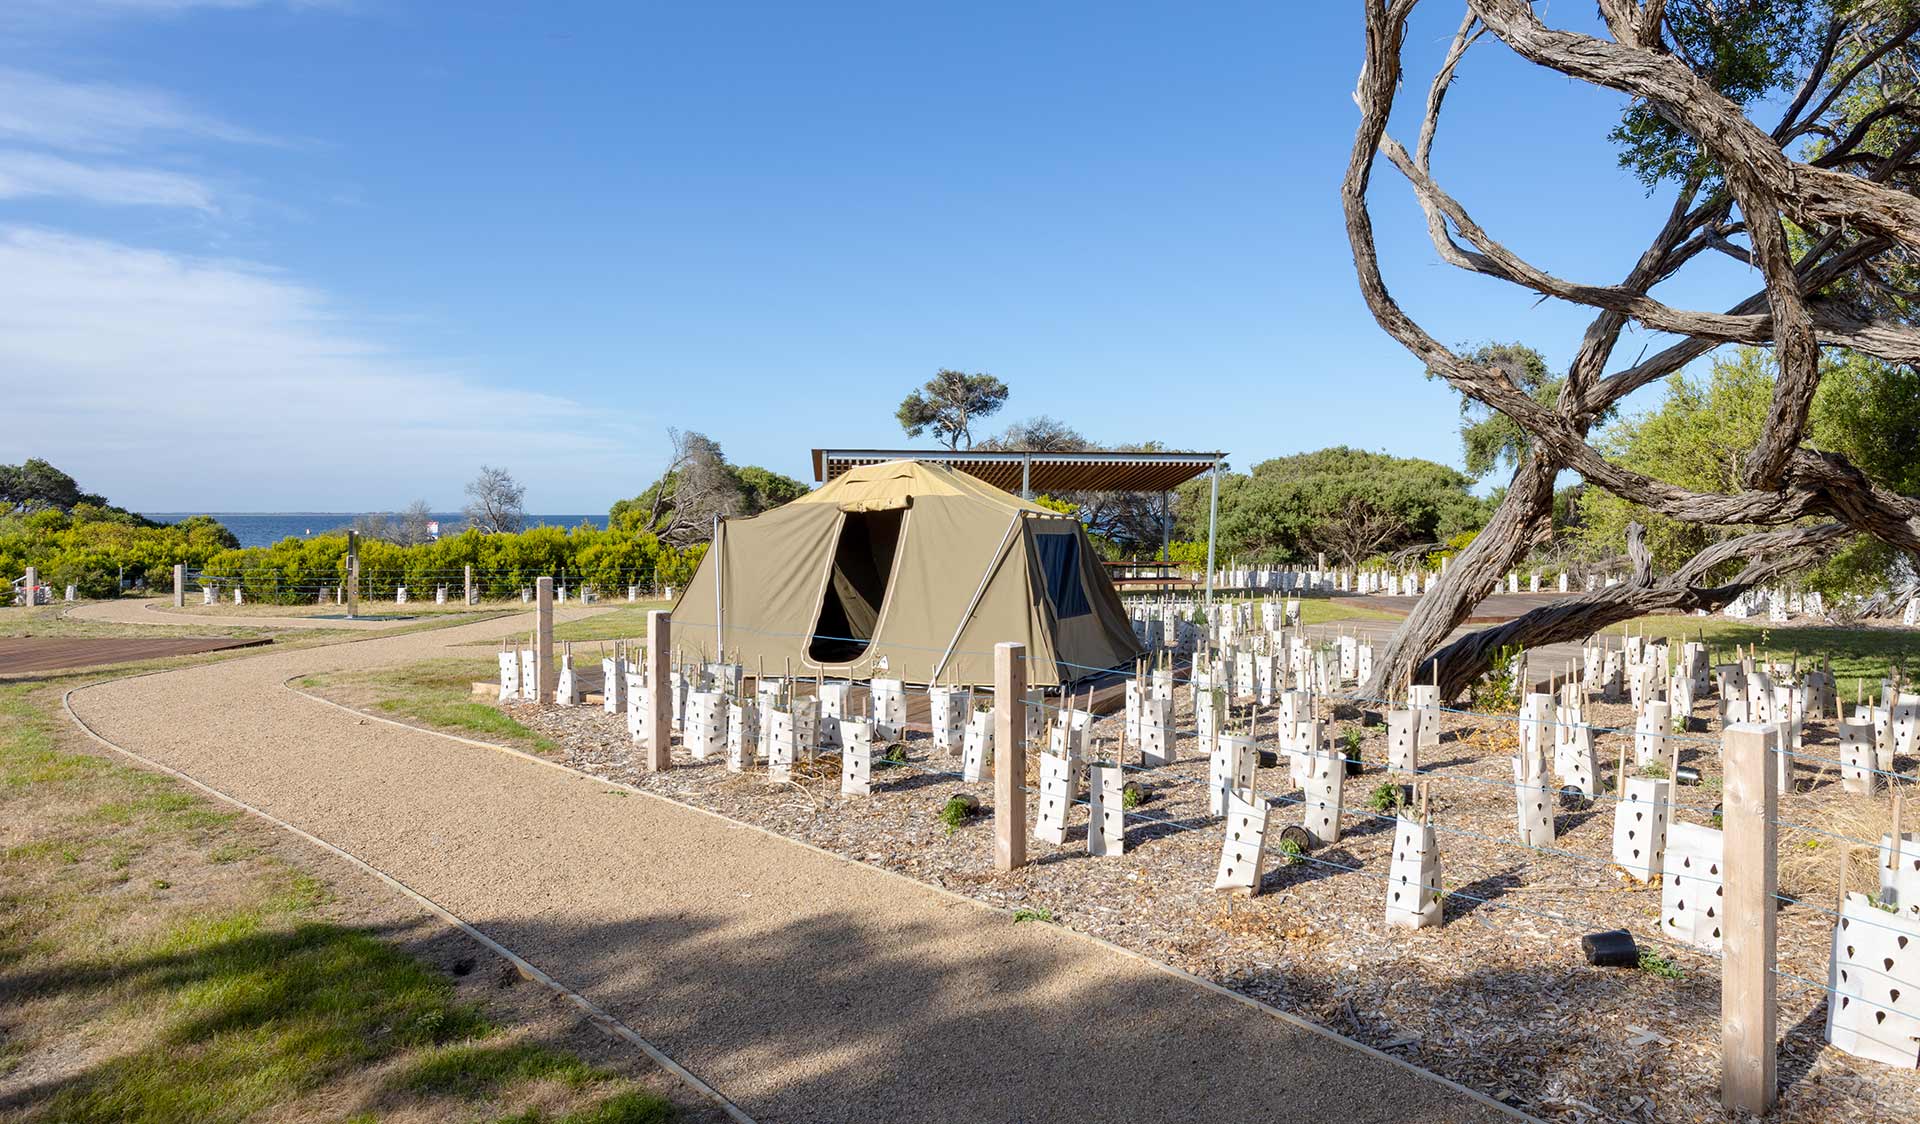 A tent set up on grass in a coastal landscape